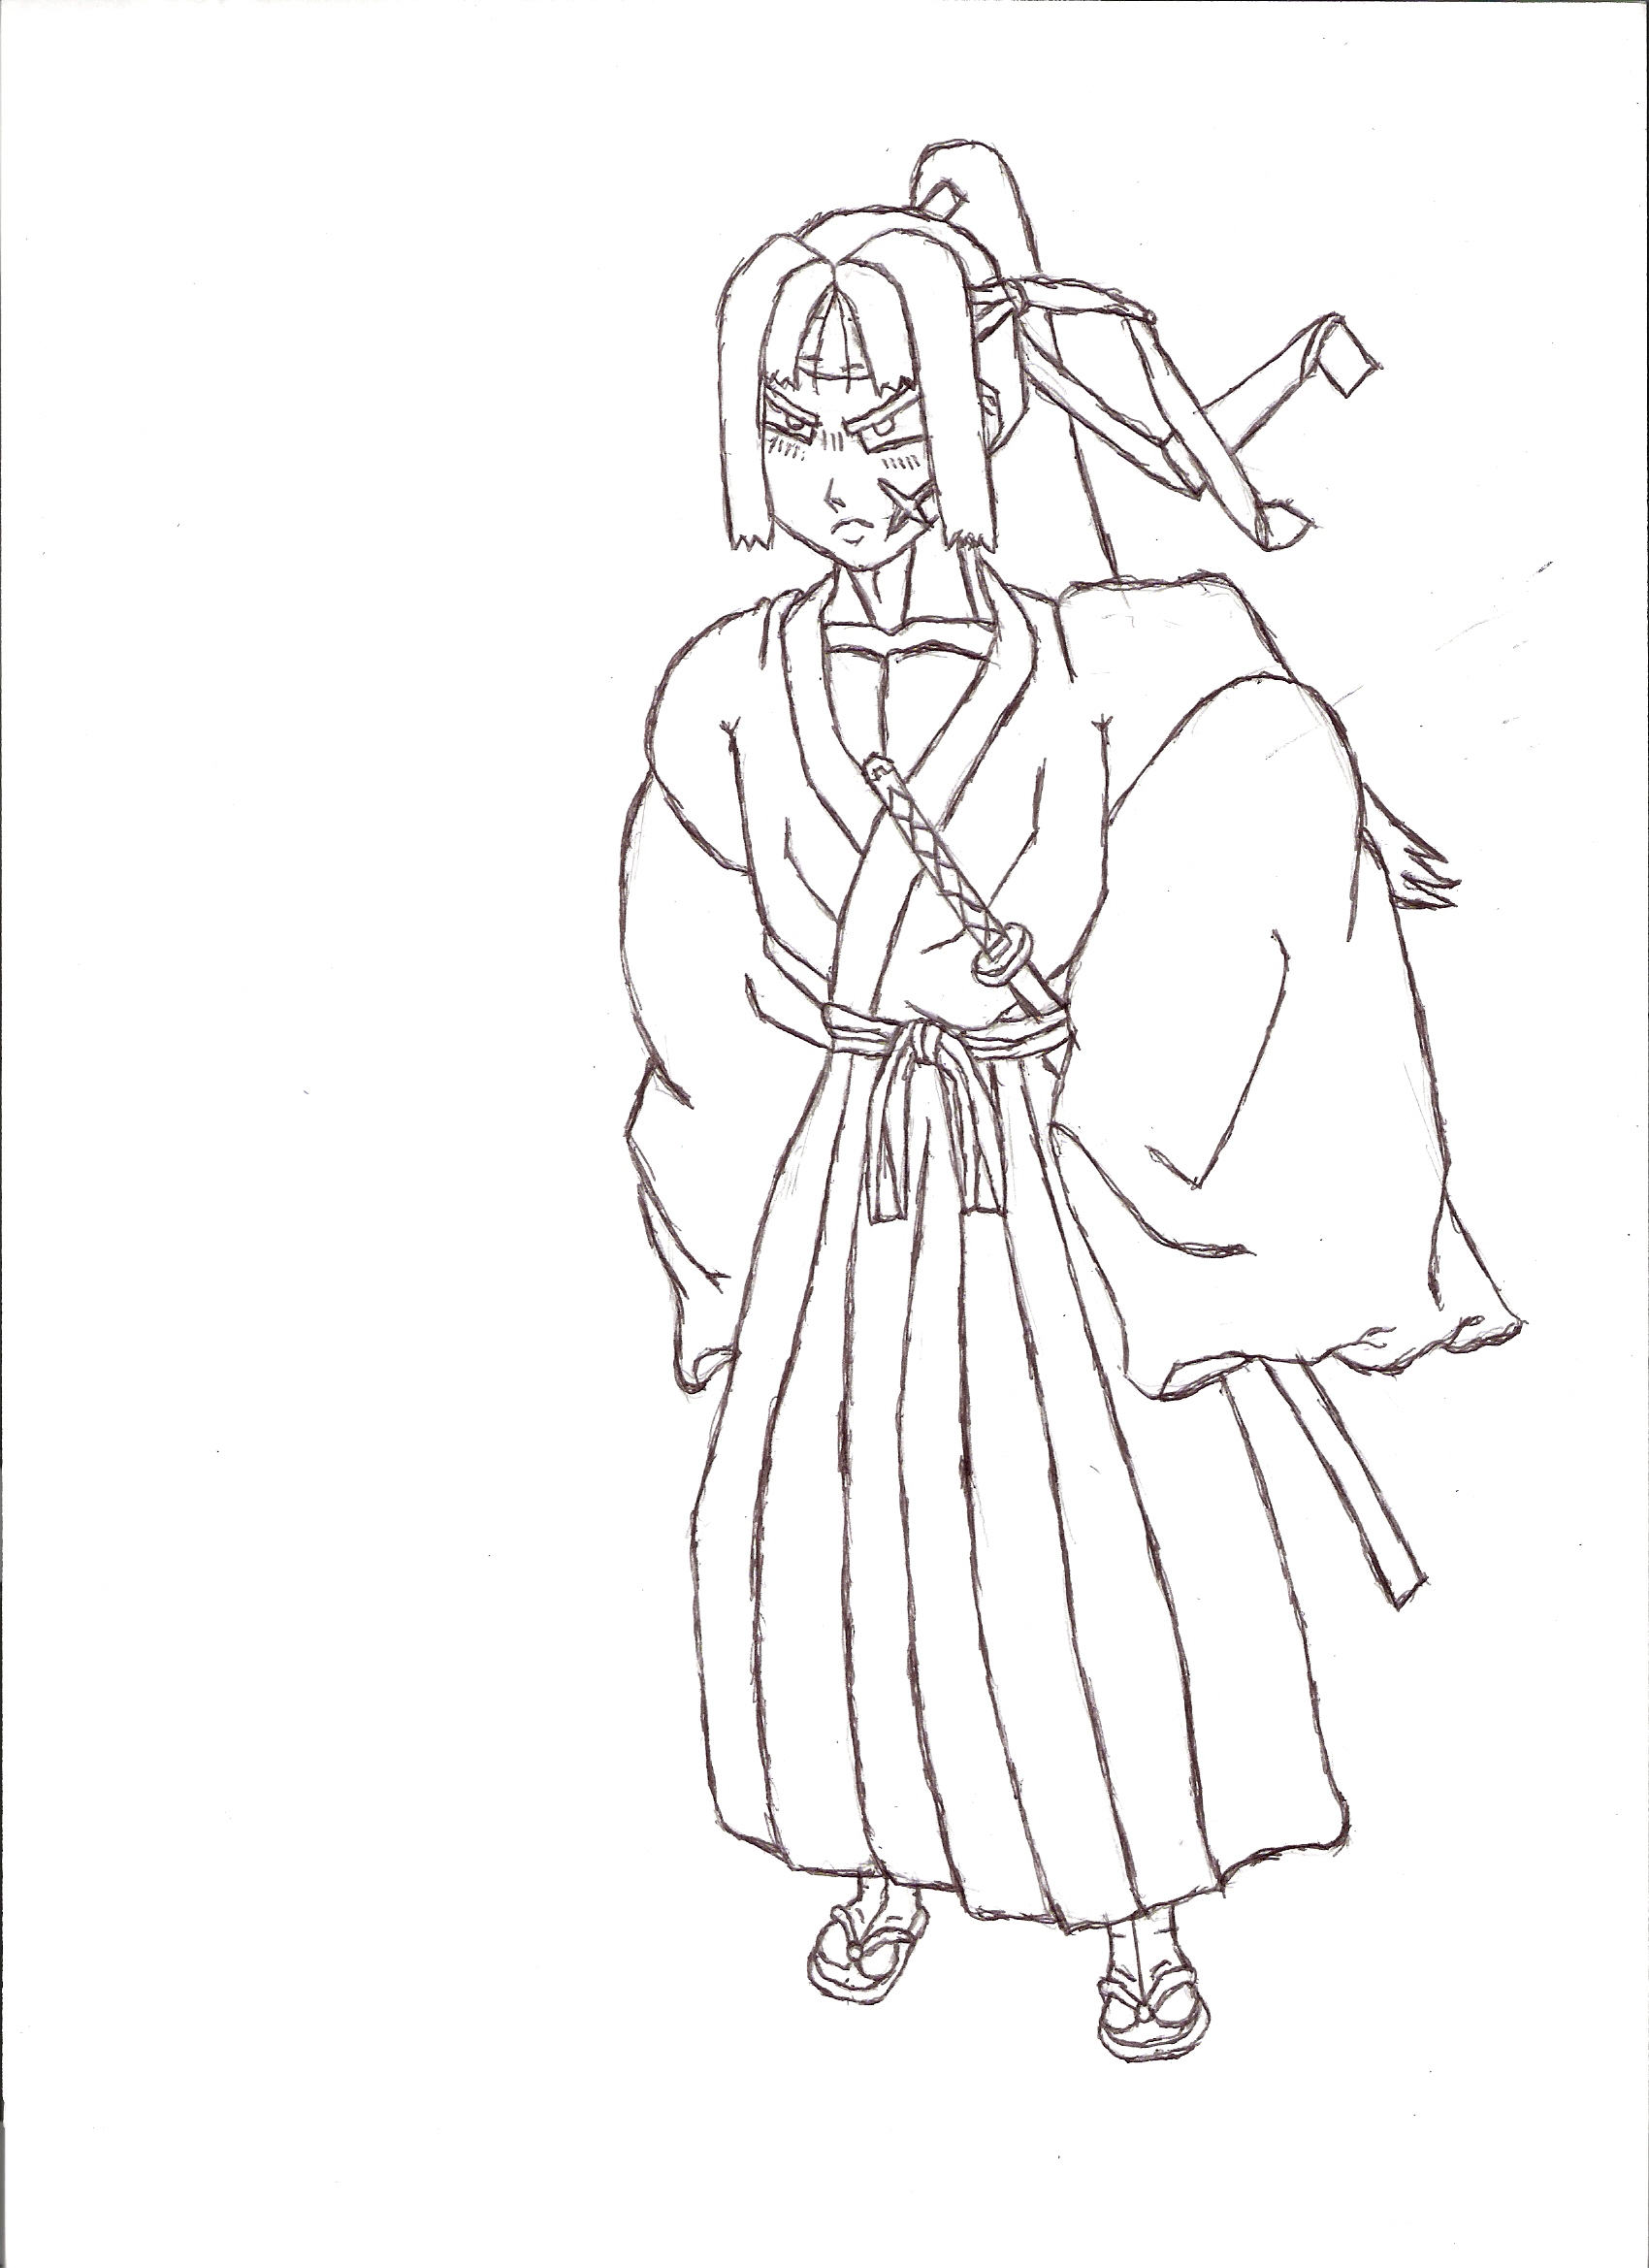 Gosamaru the Samurai by NinjaMasterGosamaru